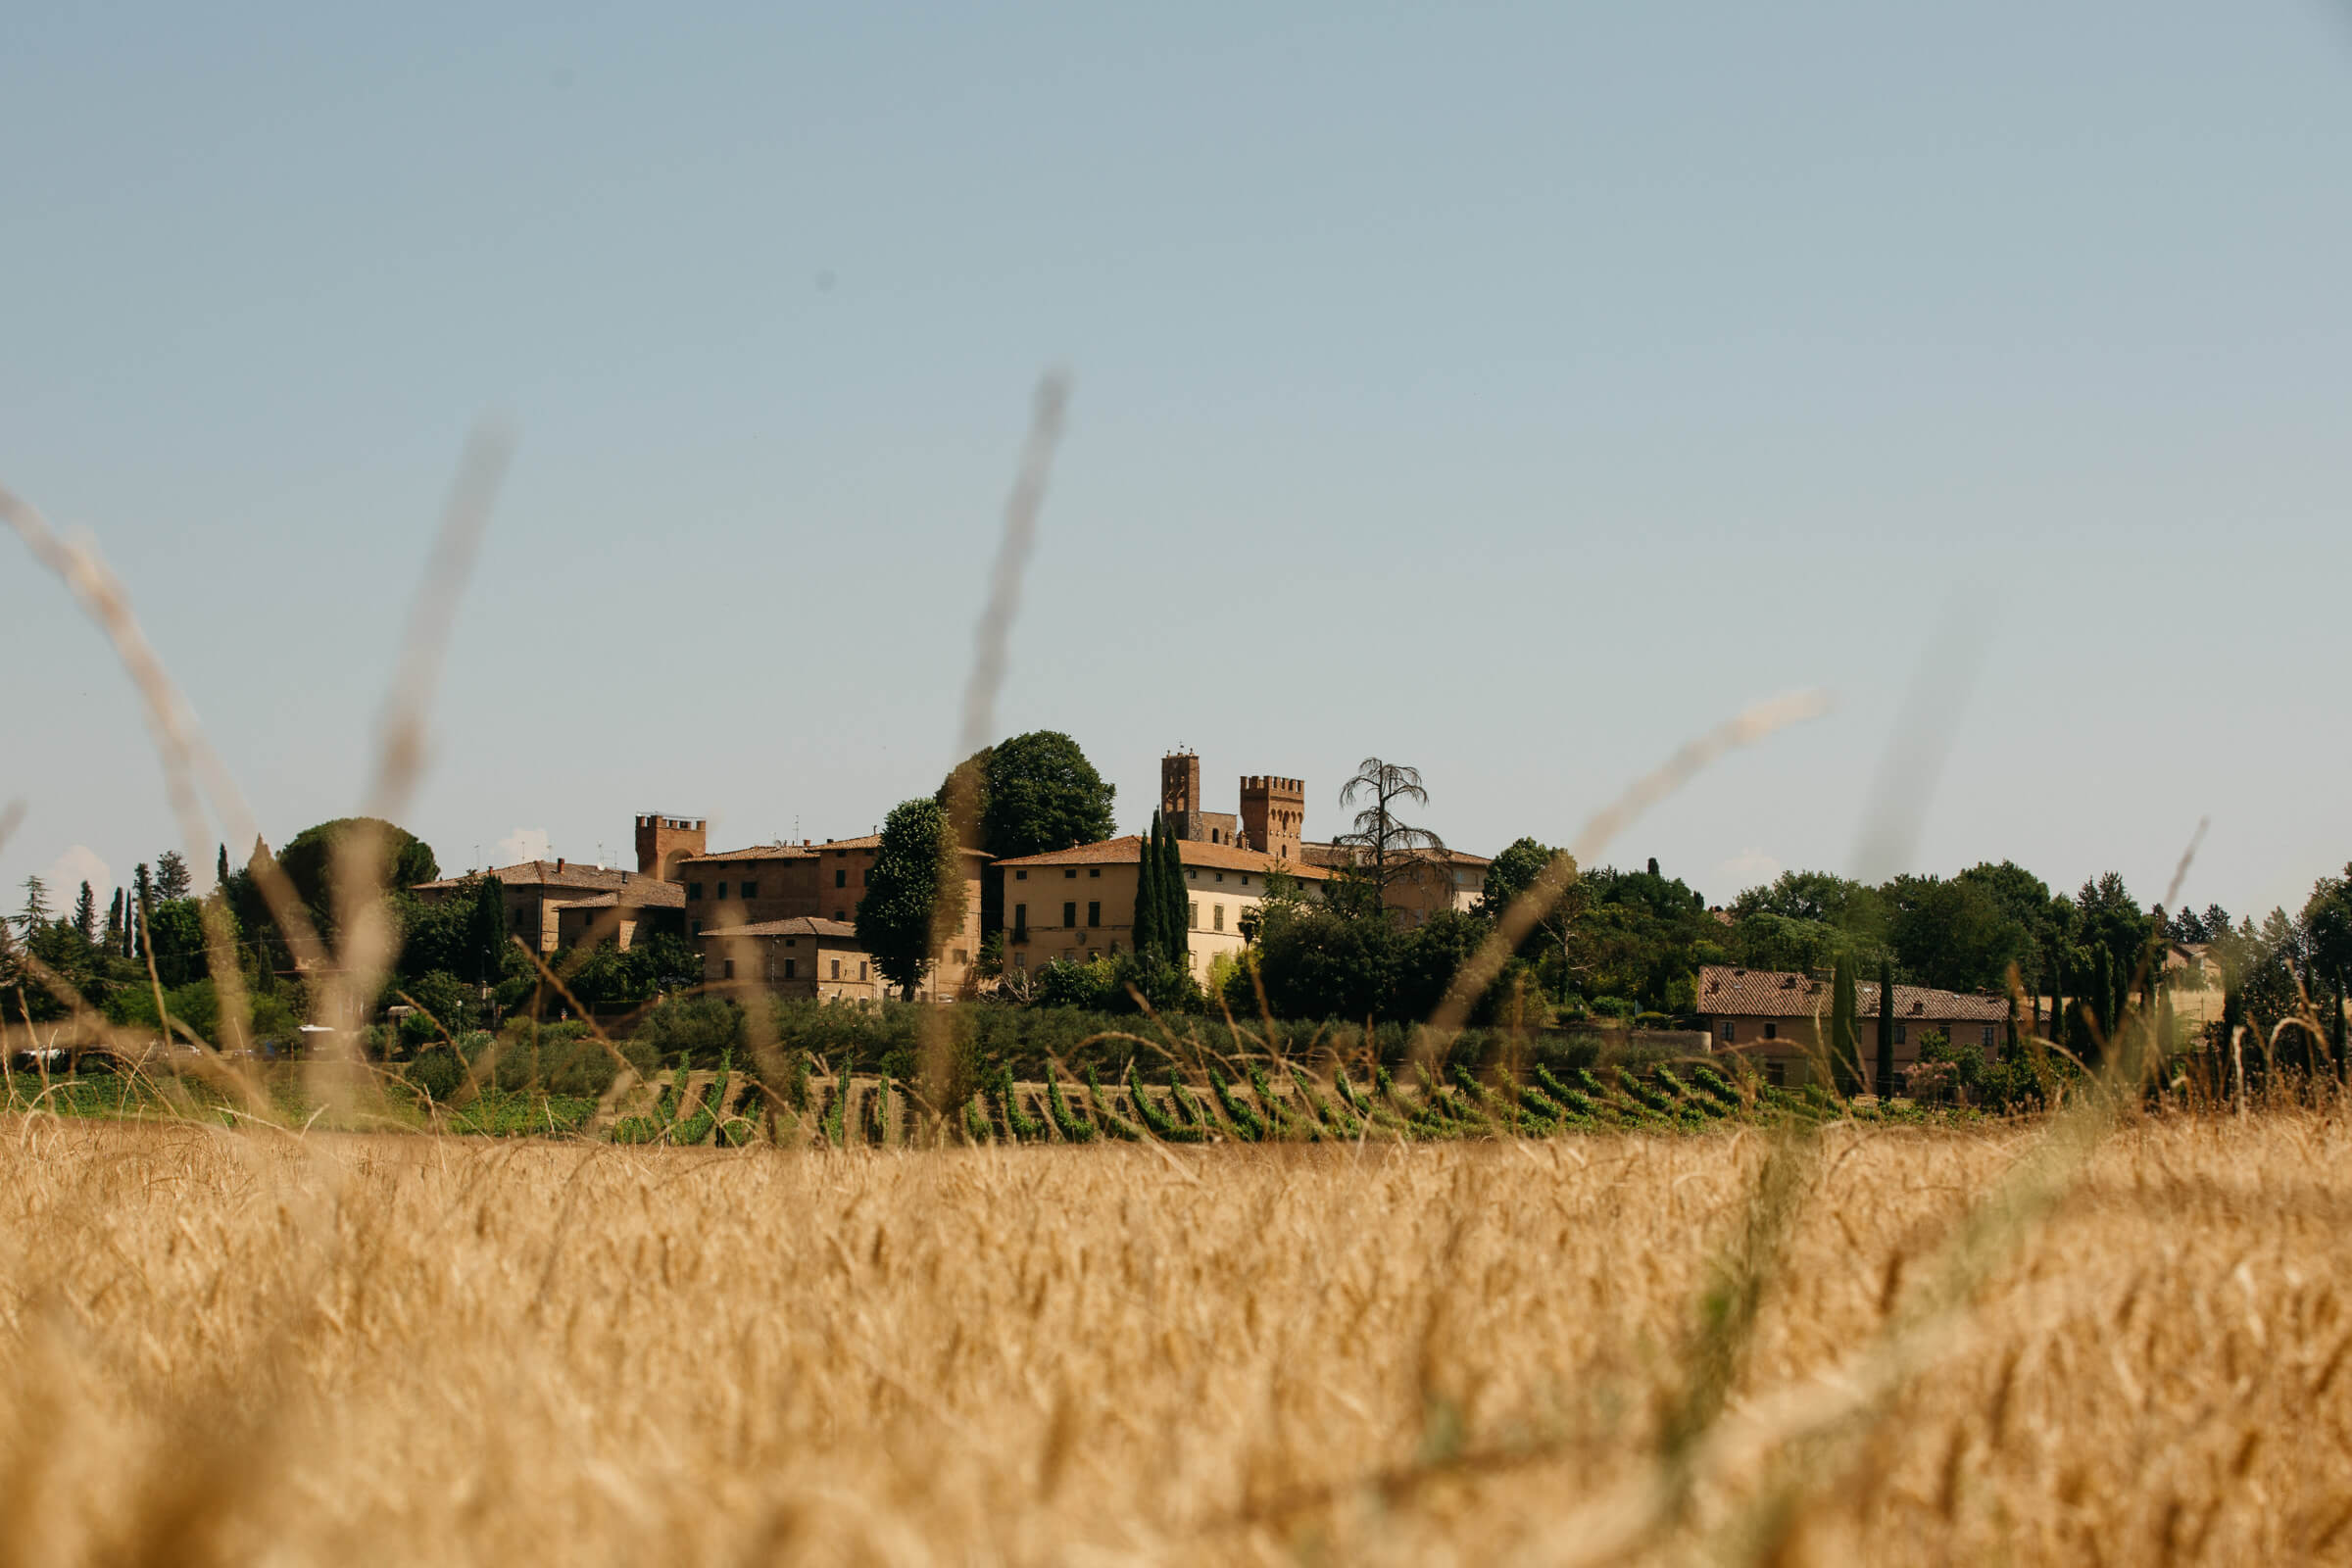 italian manor shot from a wheat field